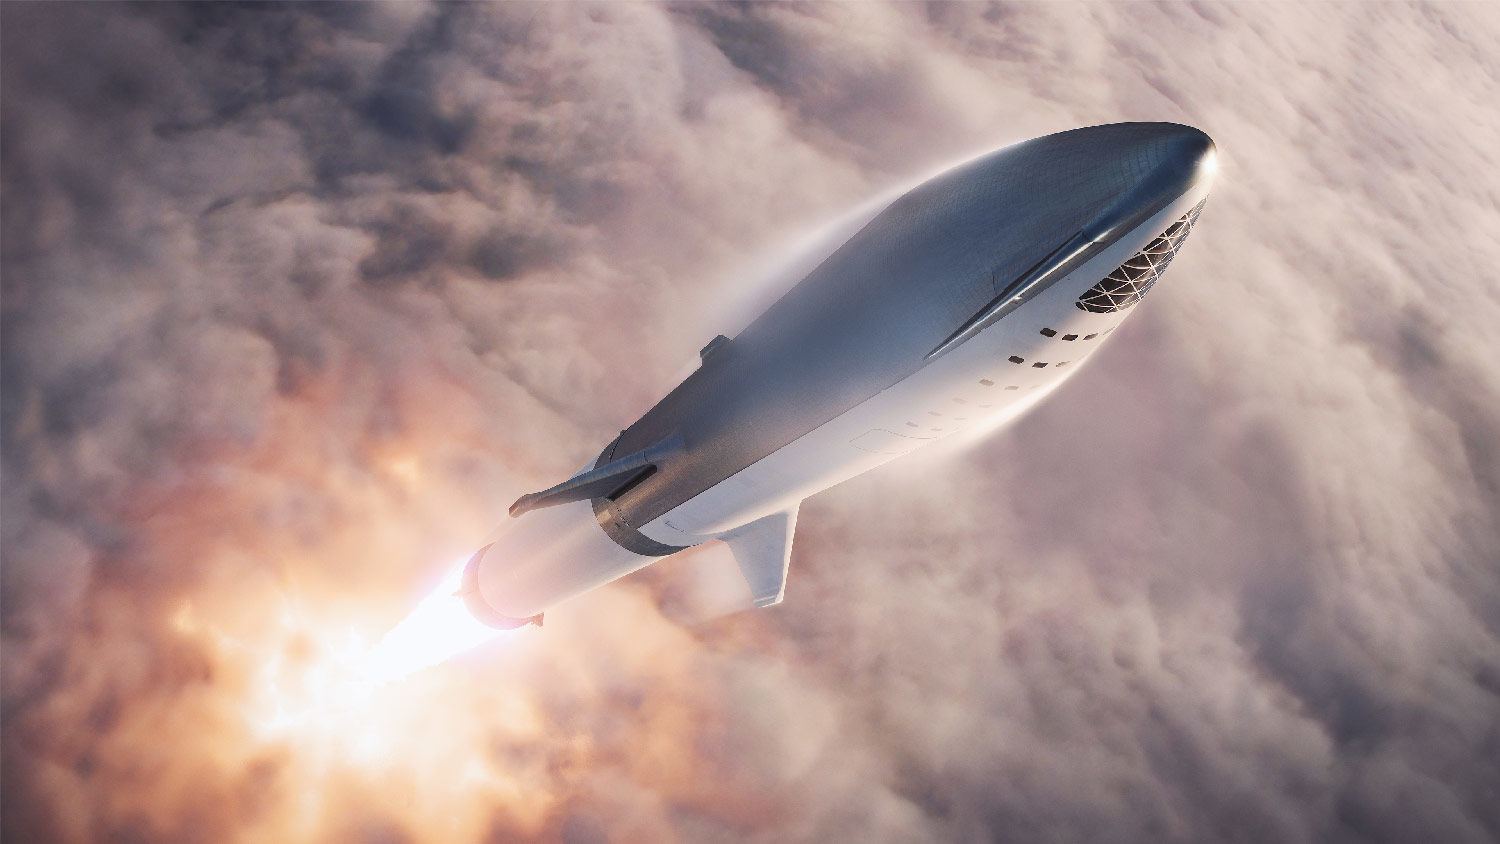 SpaceX Starship artist's rendering